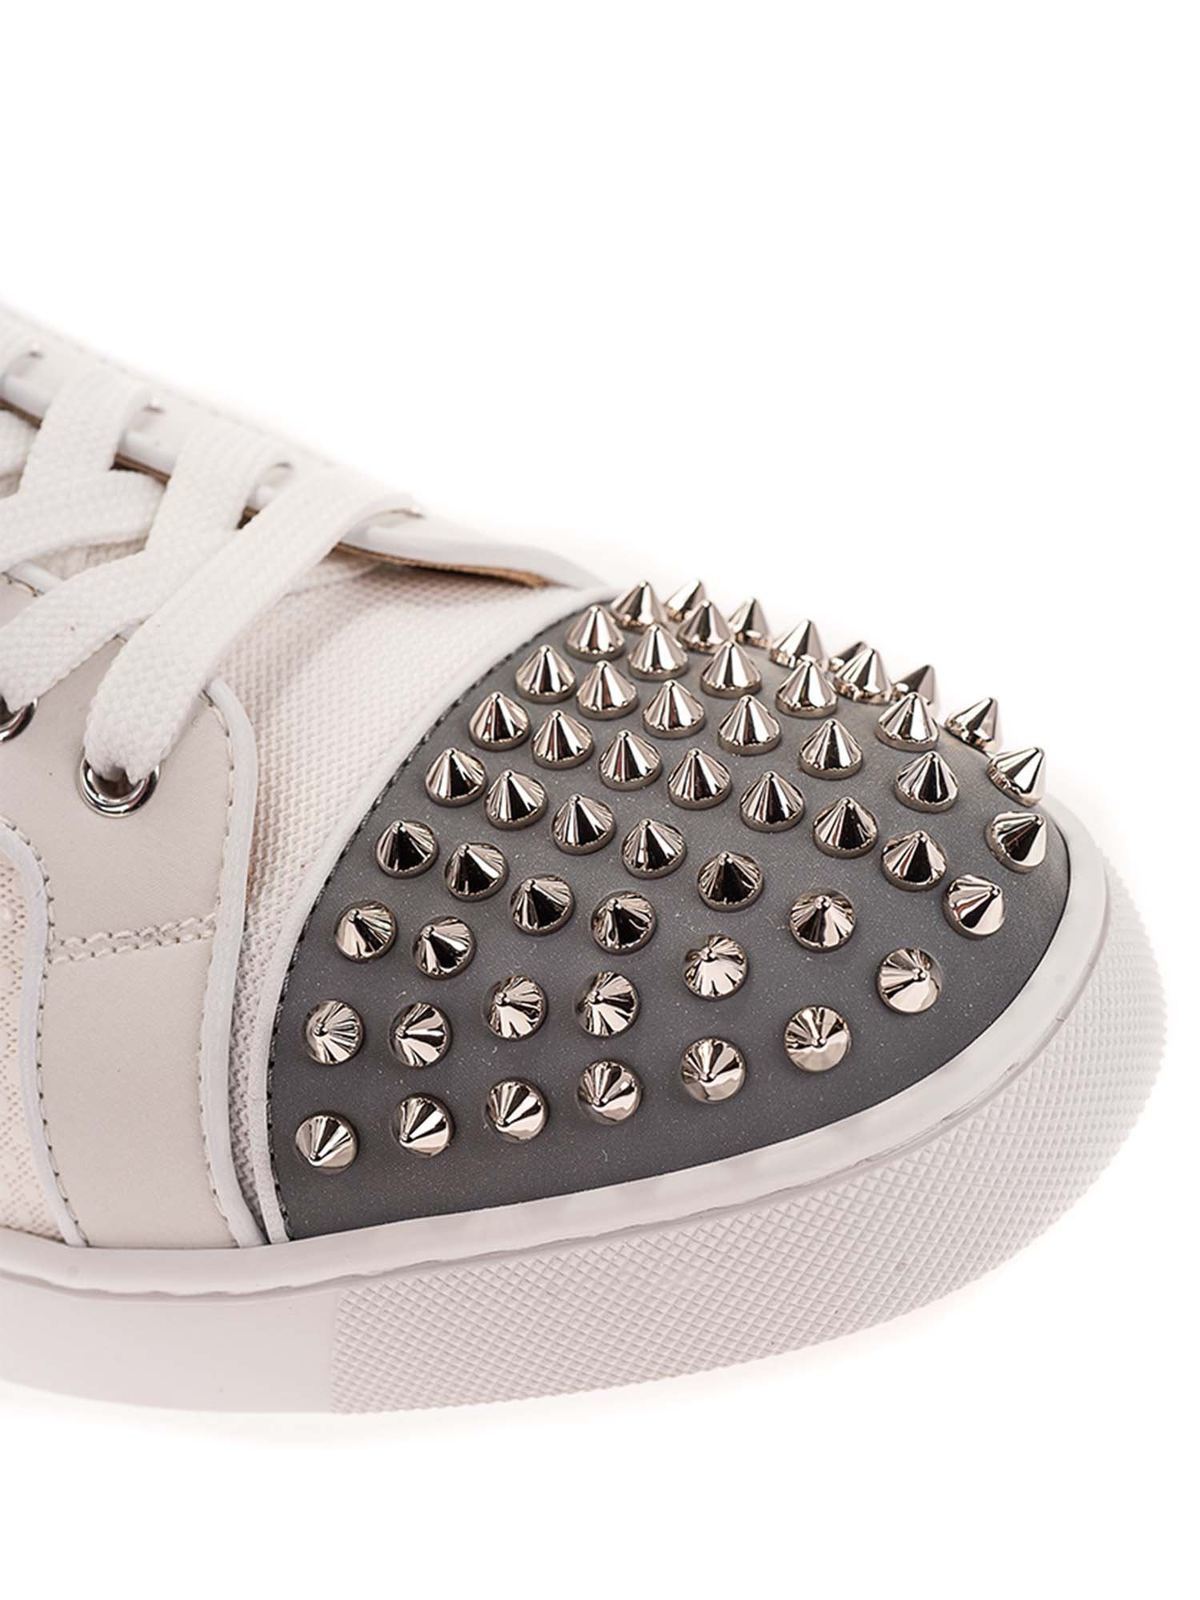 Men's Louis Junior Spiked Glitter Sneakers